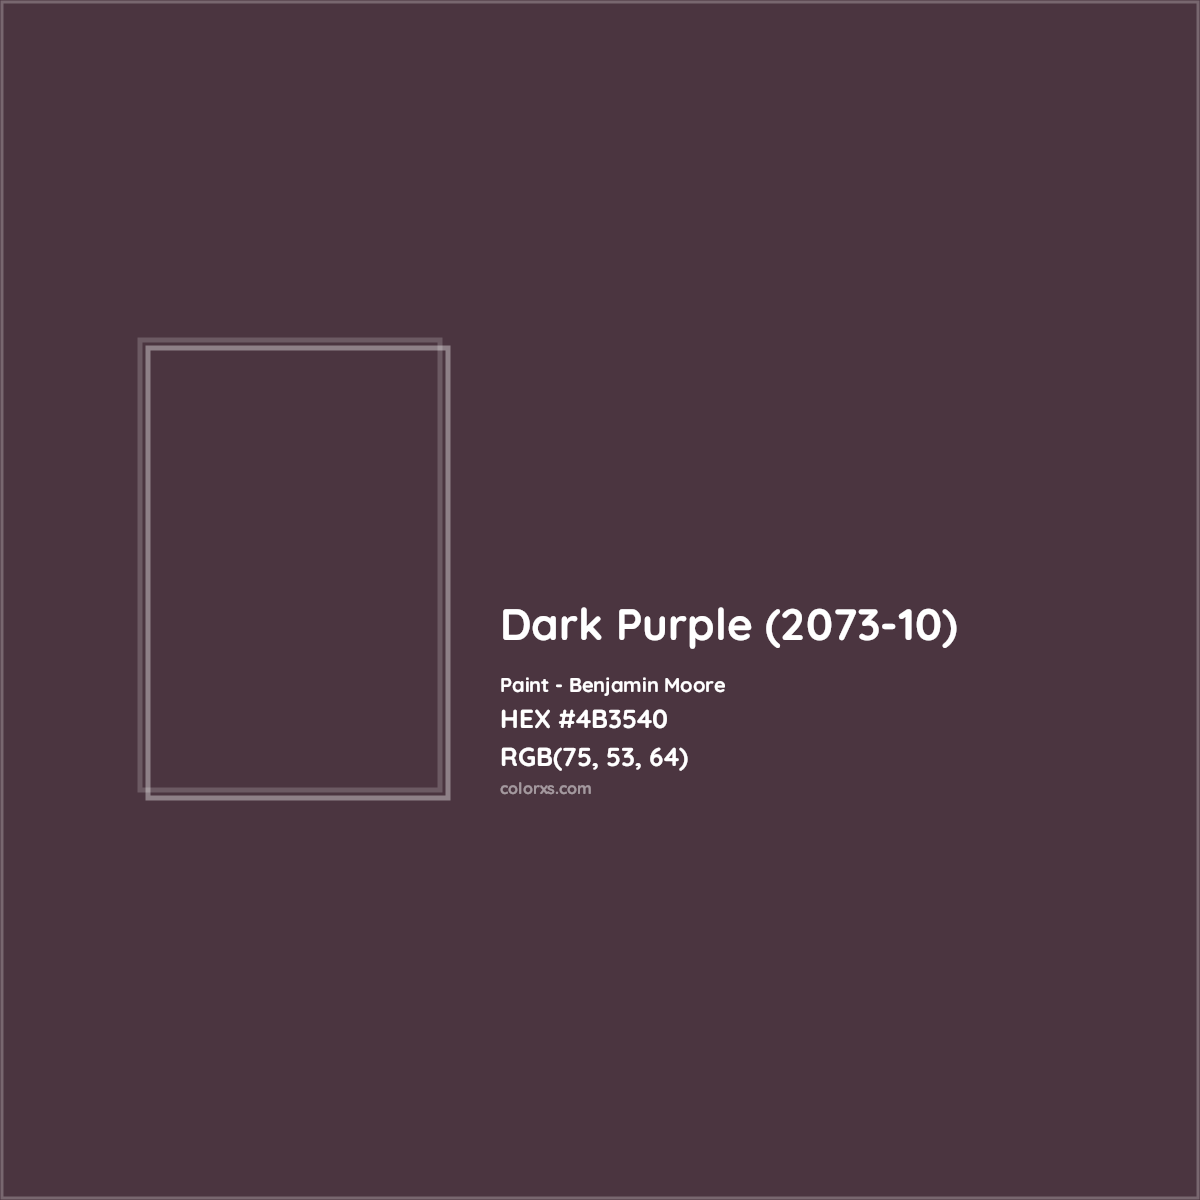 HEX #4B3540 Dark Purple (2073-10) Paint Benjamin Moore - Color Code